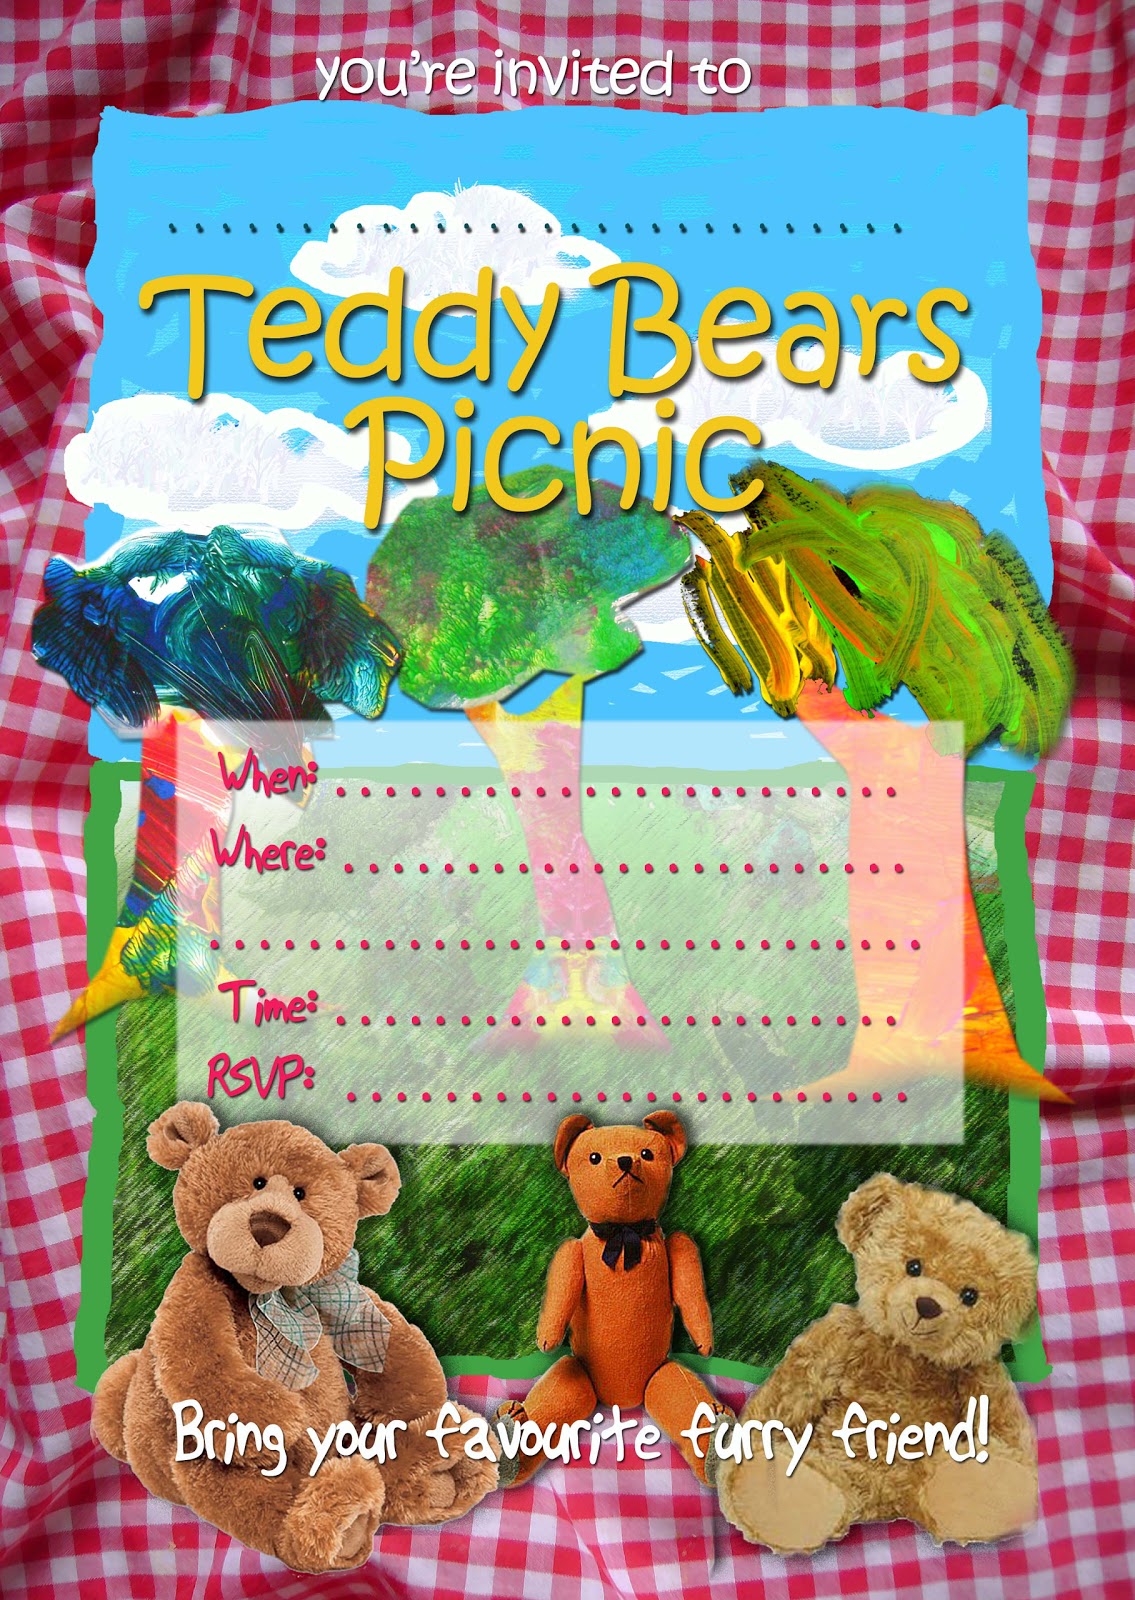 FREE Kids Party Invitations Teddy Bears Picnic Invitation